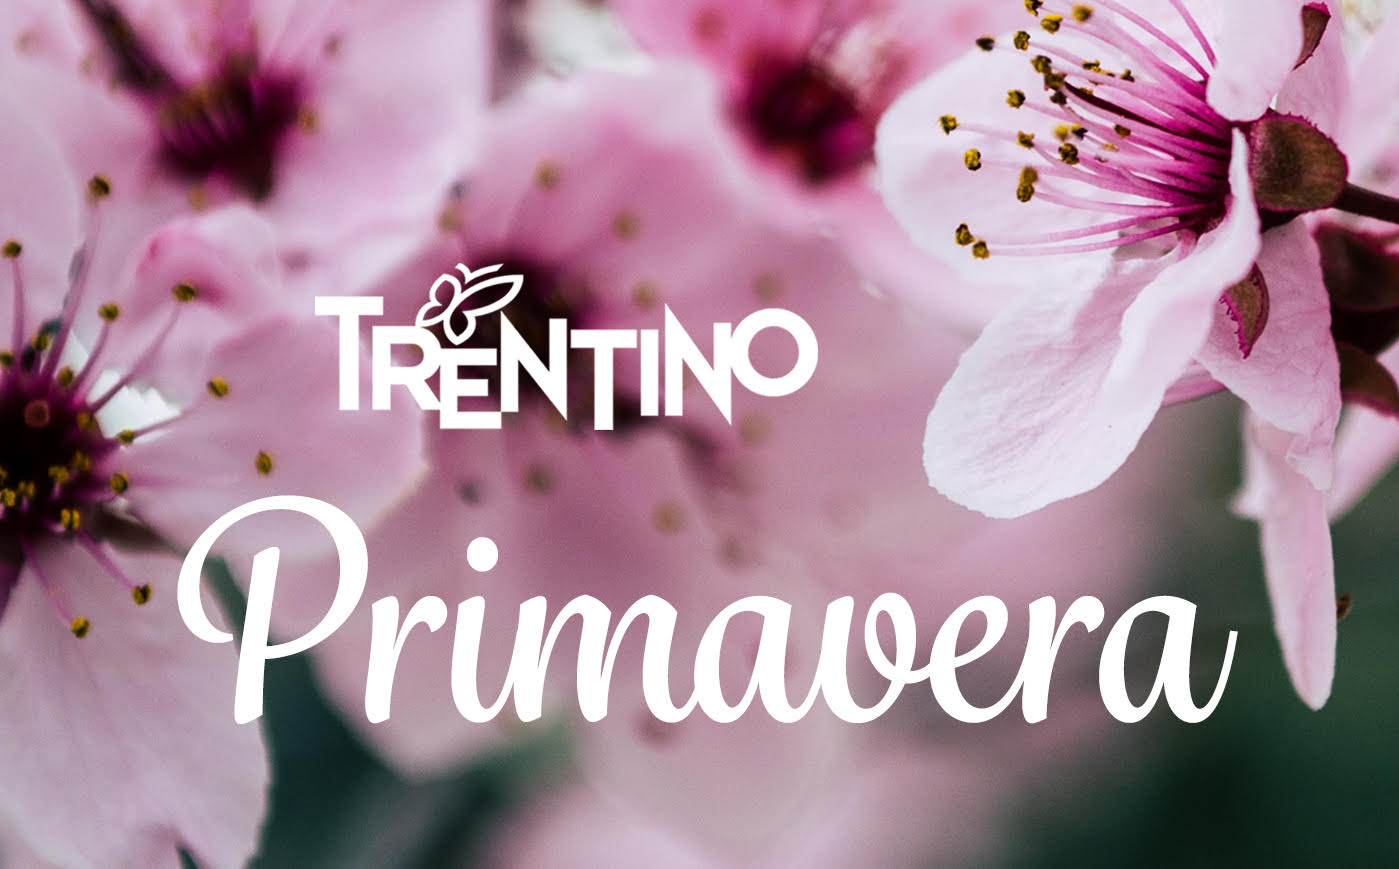 Trentino Primavera